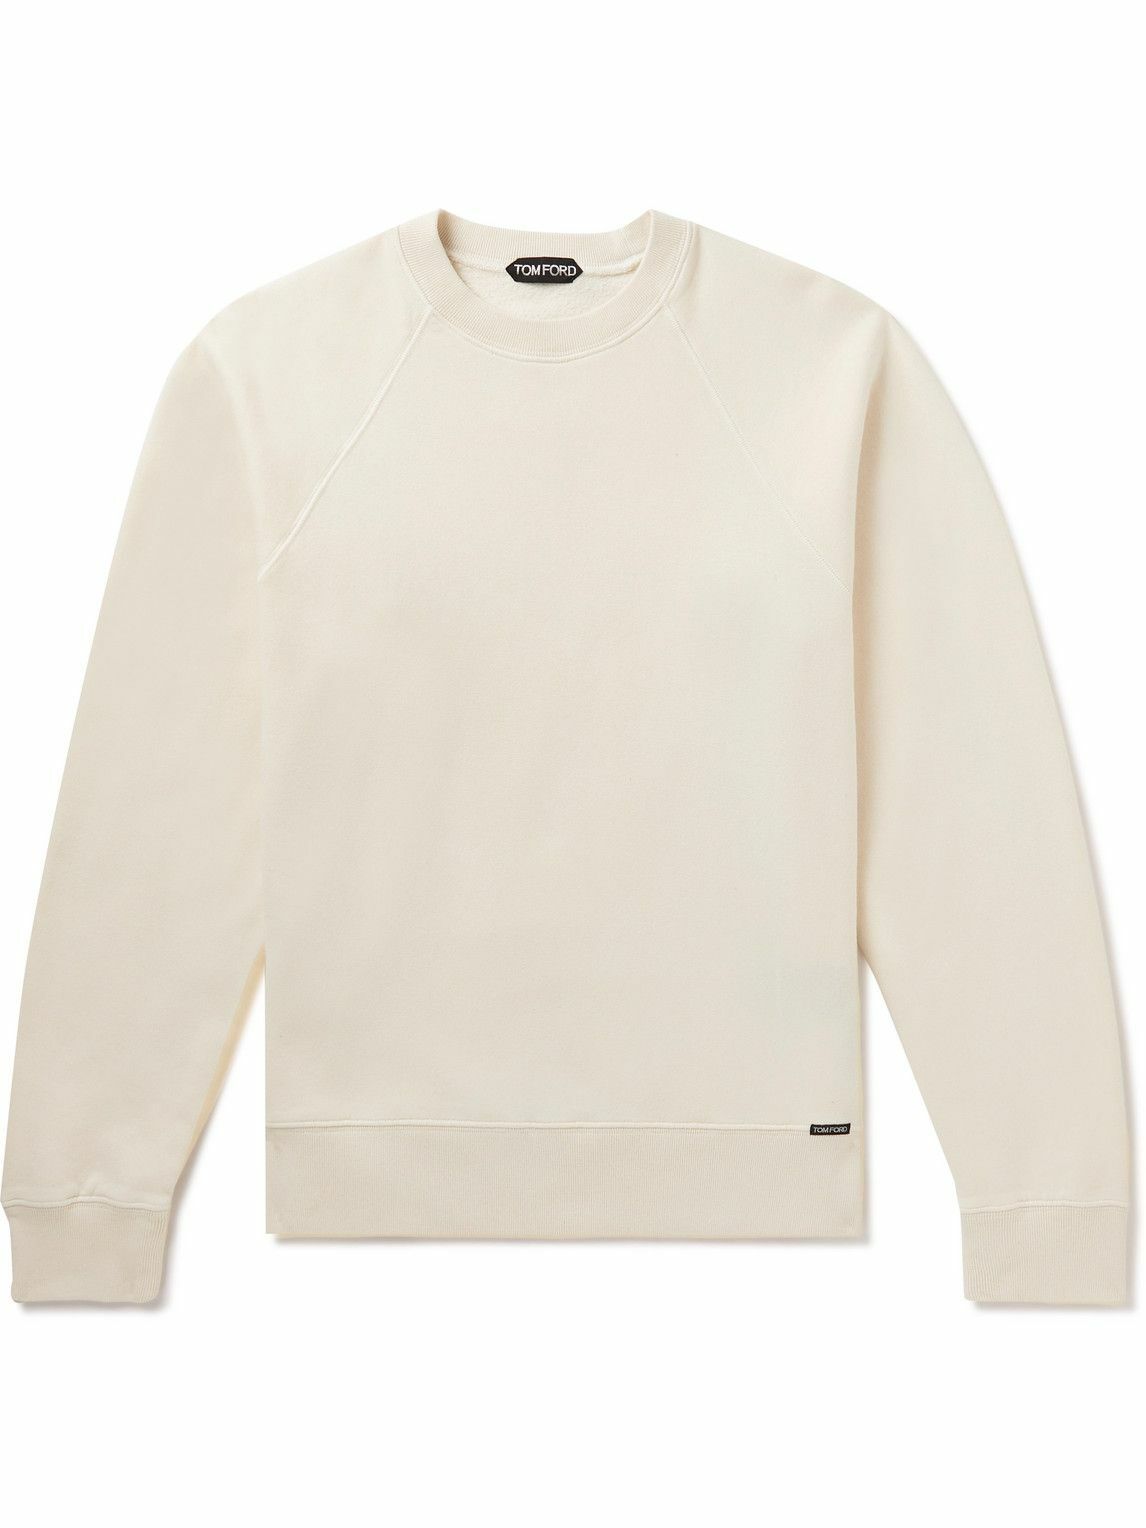 TOM FORD - Garment-Dyed Cotton-Jersey Sweatshirt - Neutrals TOM FORD